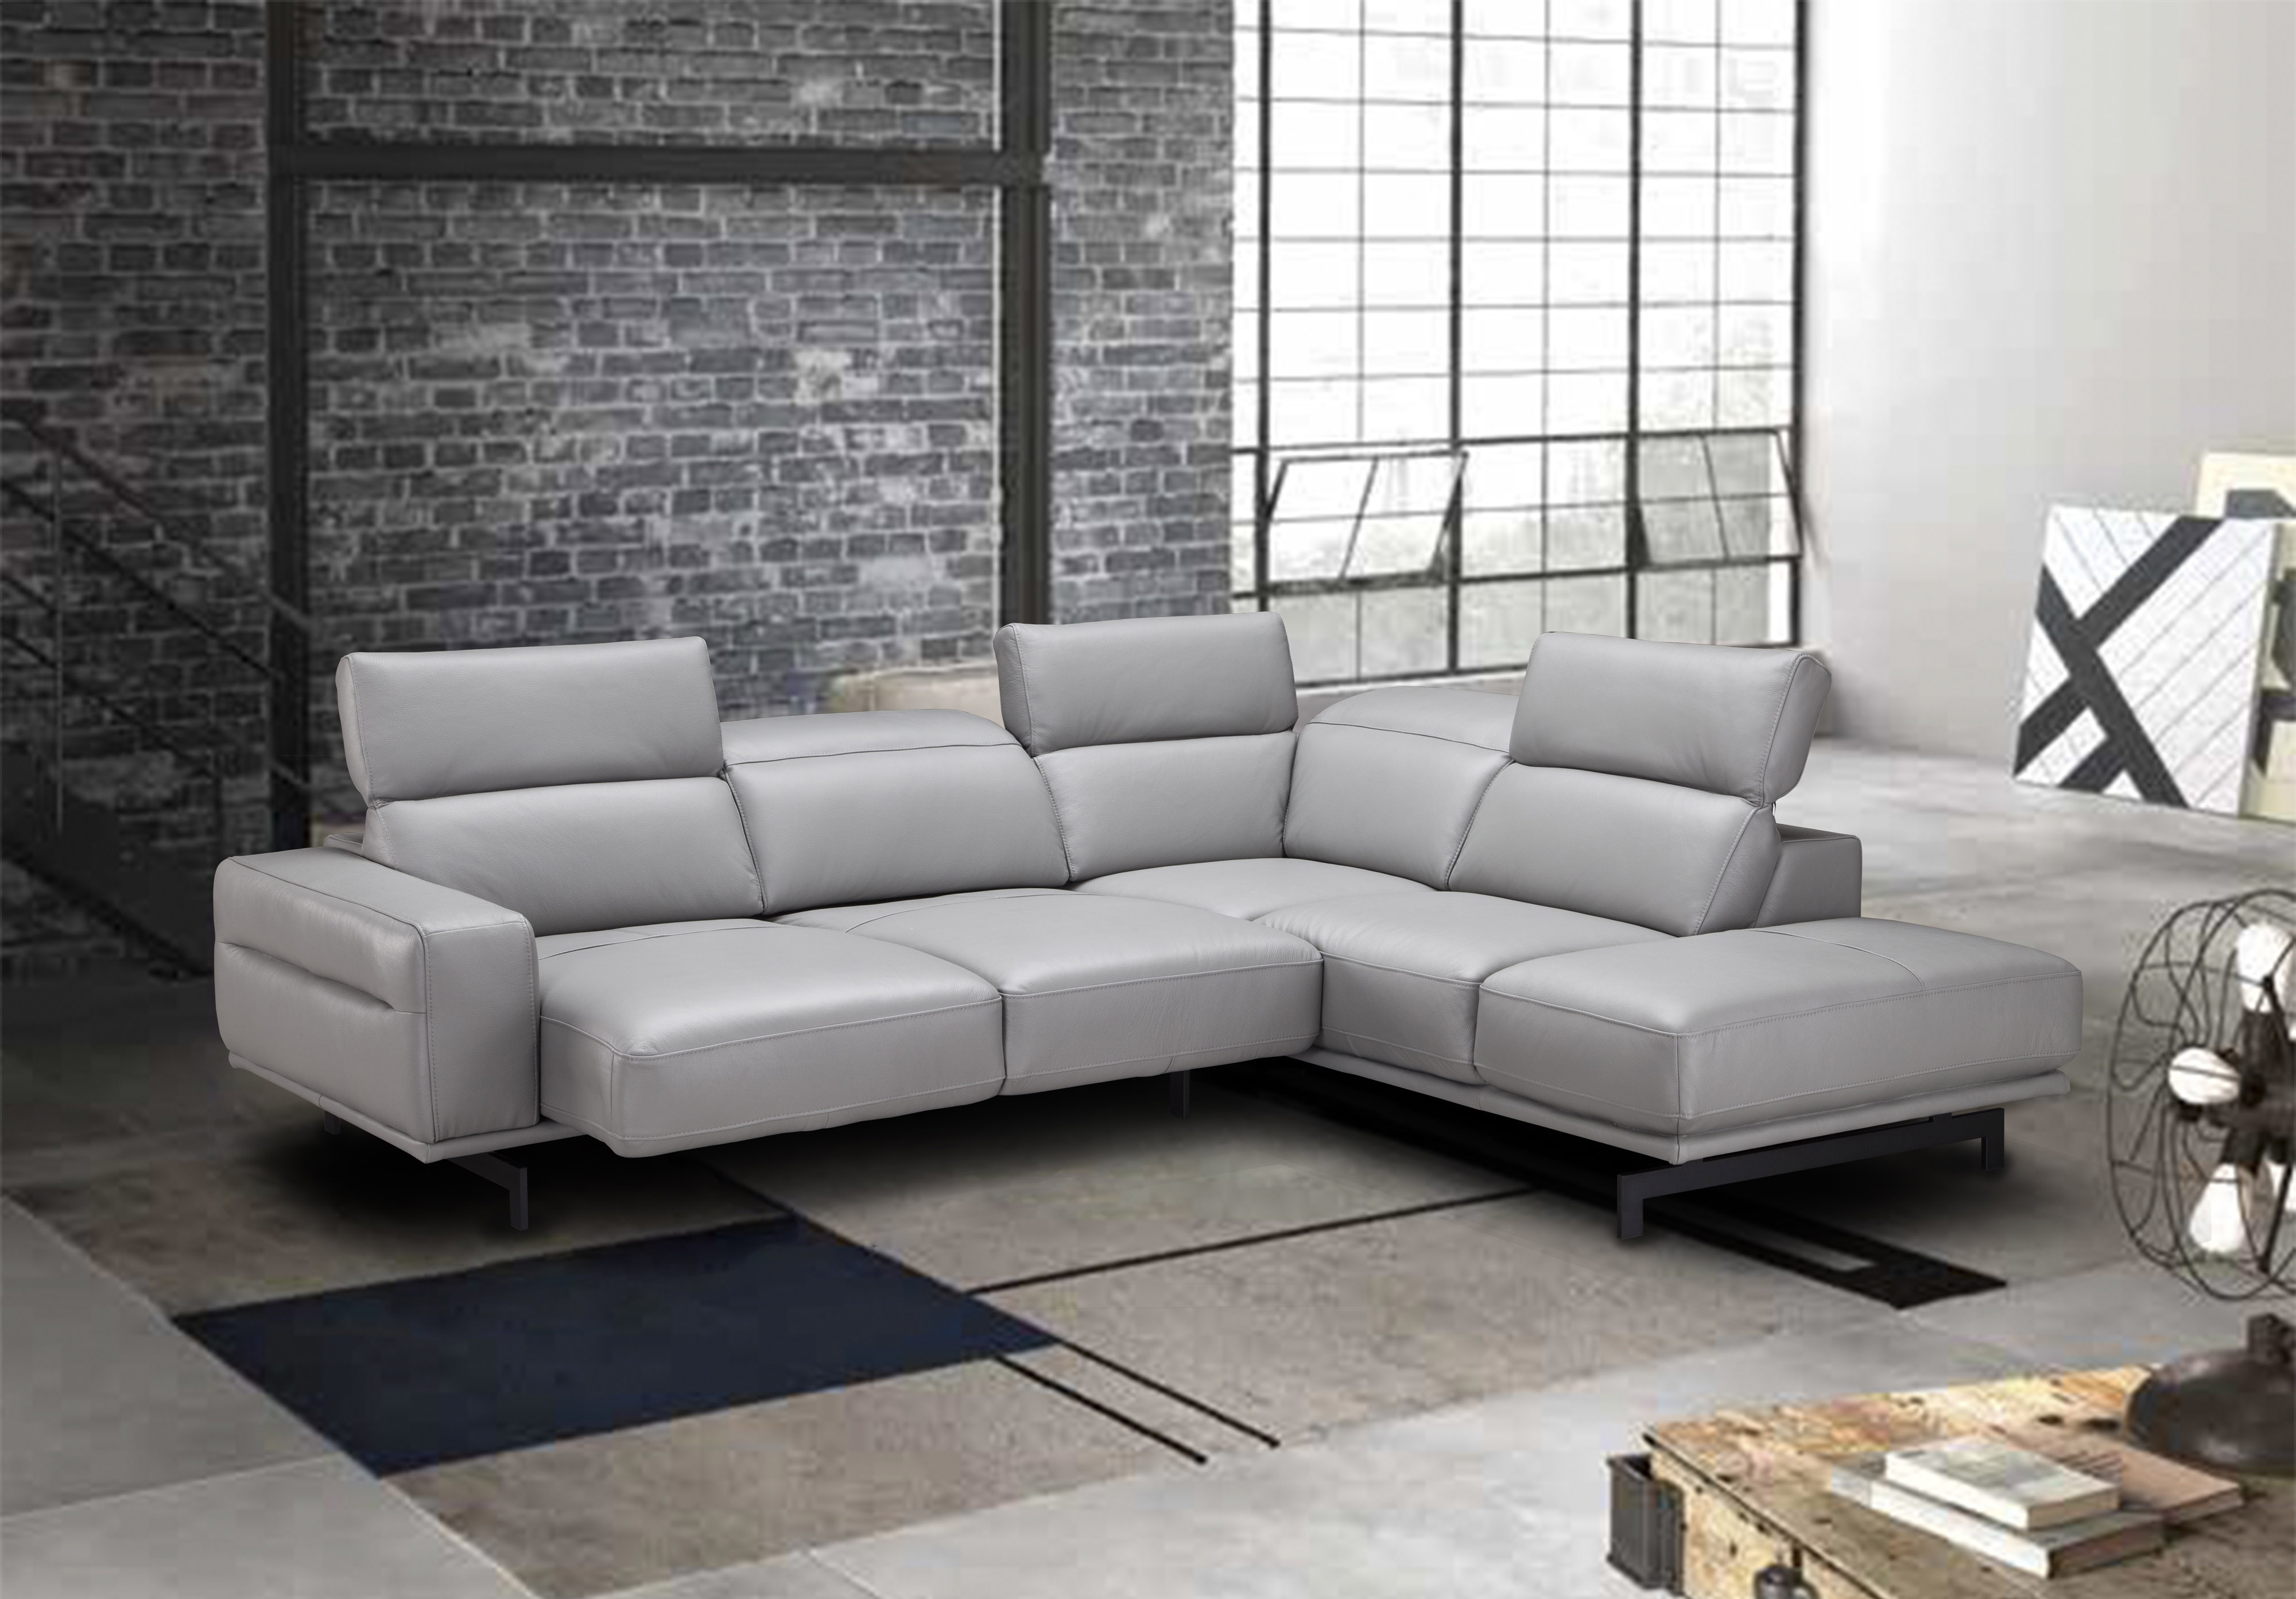 Adjustable Advanced Italian Top Grain, Italian Leather Sofa Sectional